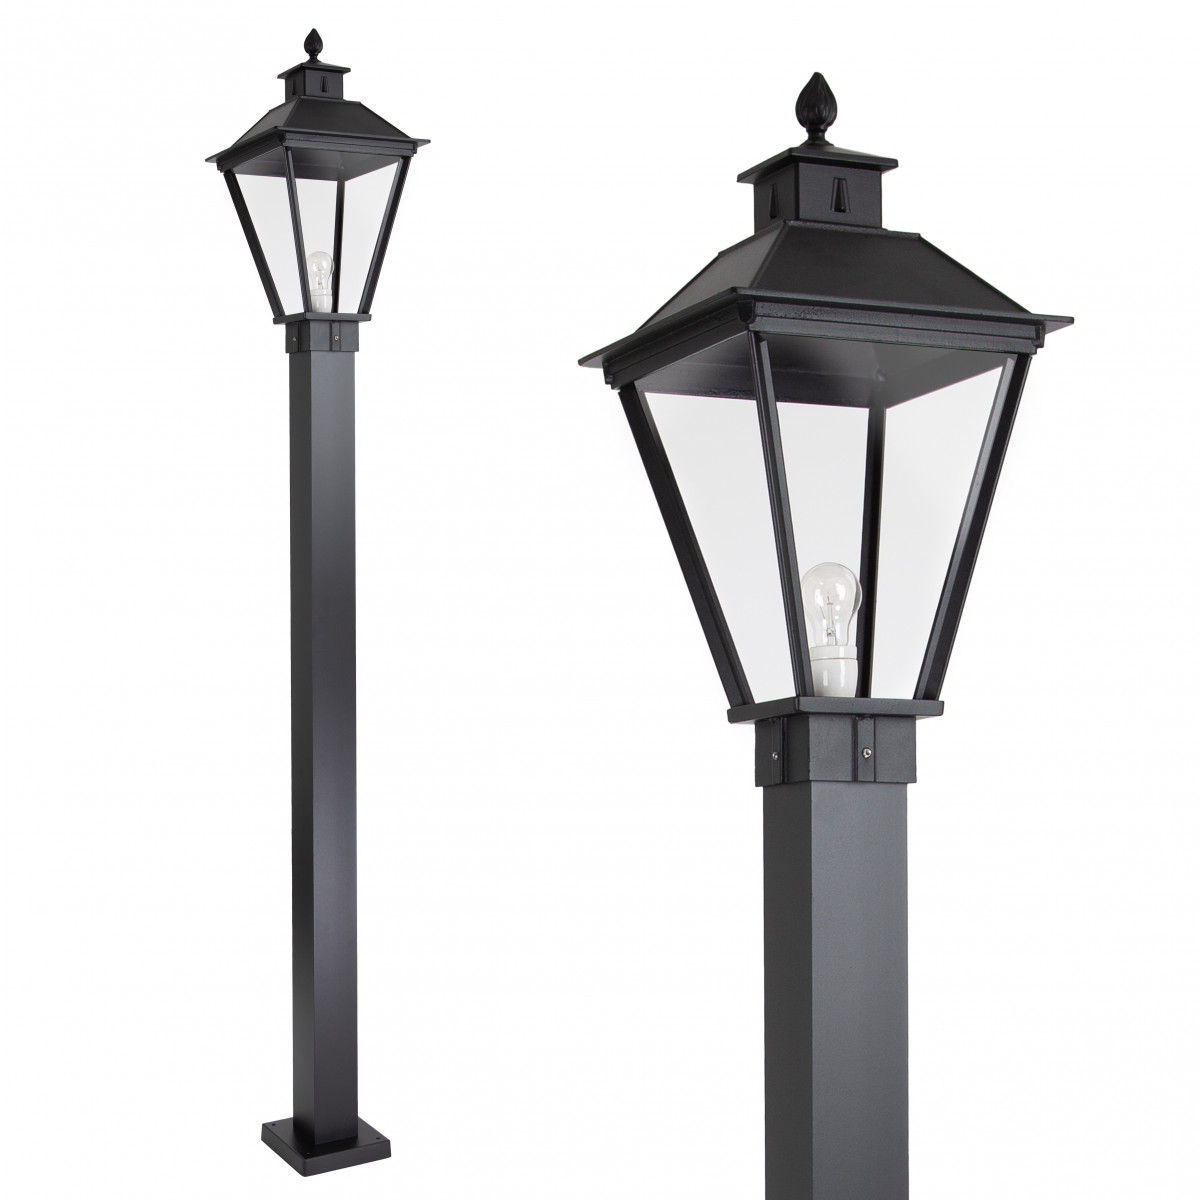 Klassieke buitenlamp Square Lantaarn tuinlamp vierkant in de kleur zwart